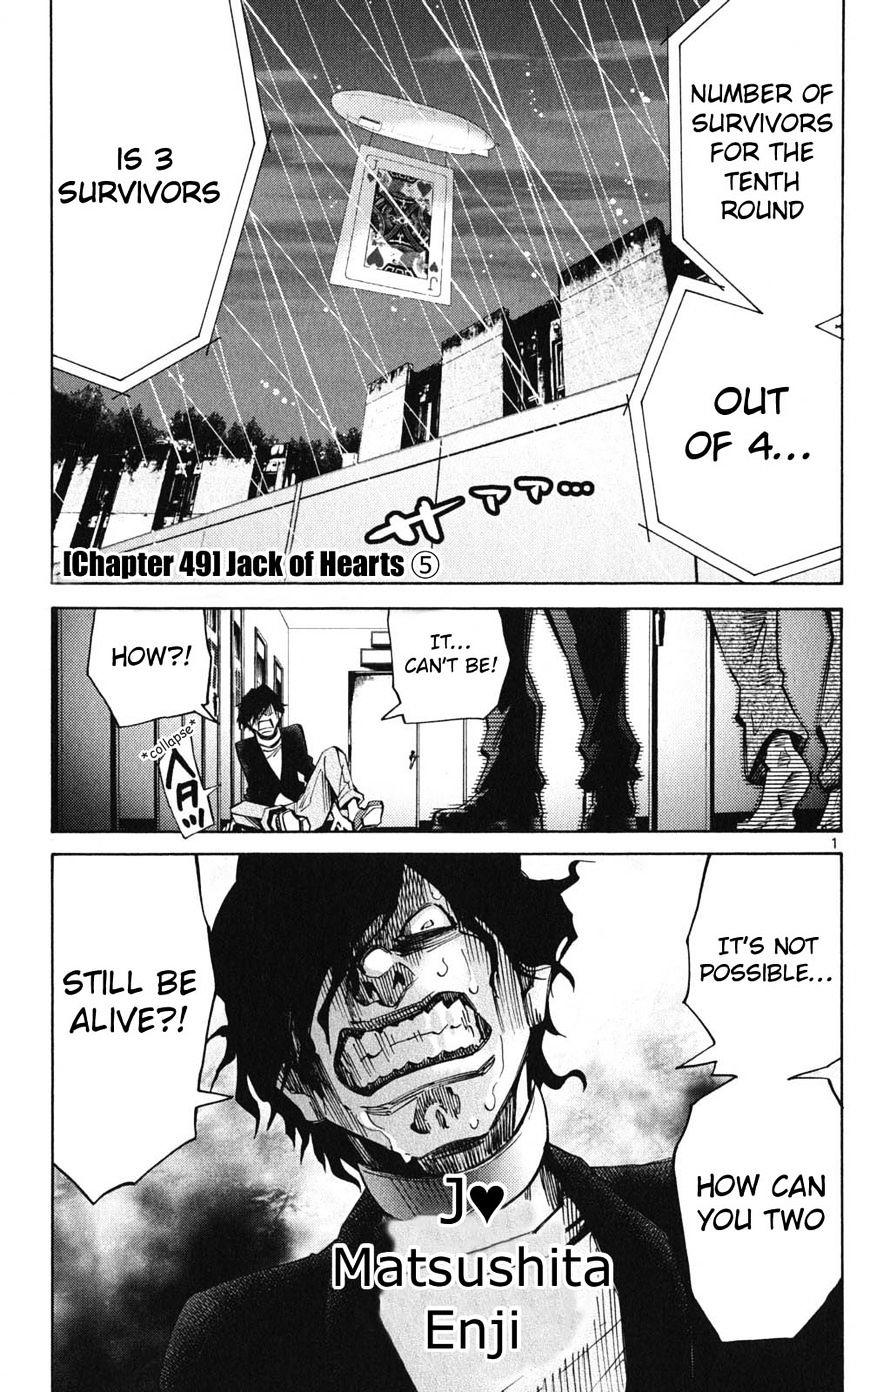 Imawa No Kuni No Alice Chapter 49 : Jack Of Hearts (5) page 1 - Mangakakalot